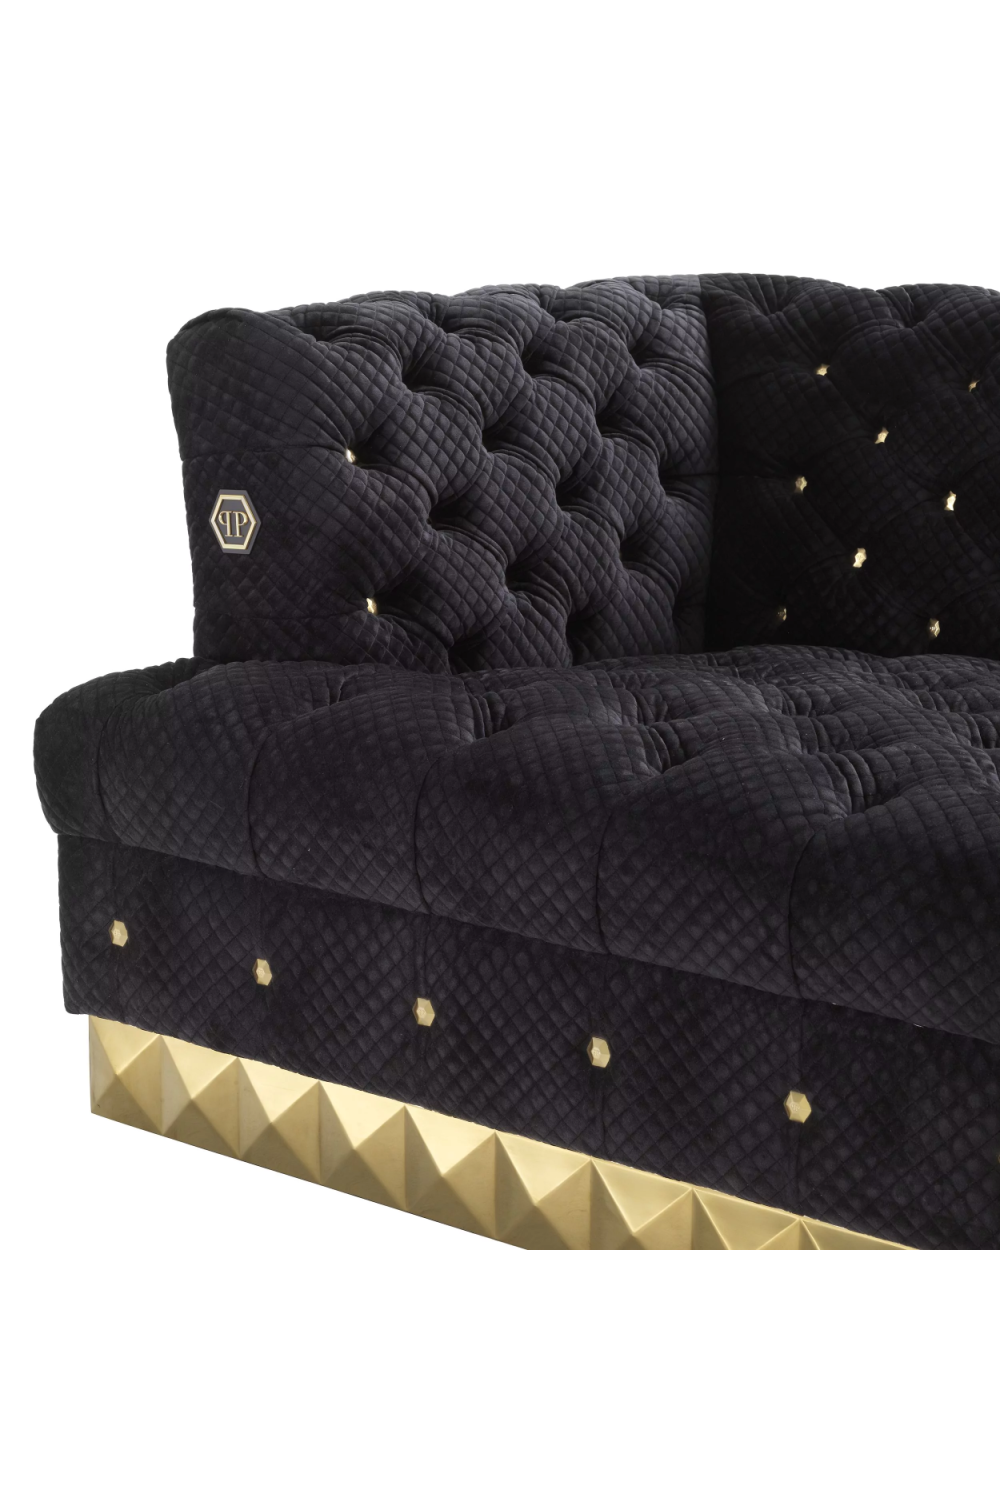 Quilted Black Velvet Sofa S | Philipp Plein Rockstud | Oroa.com